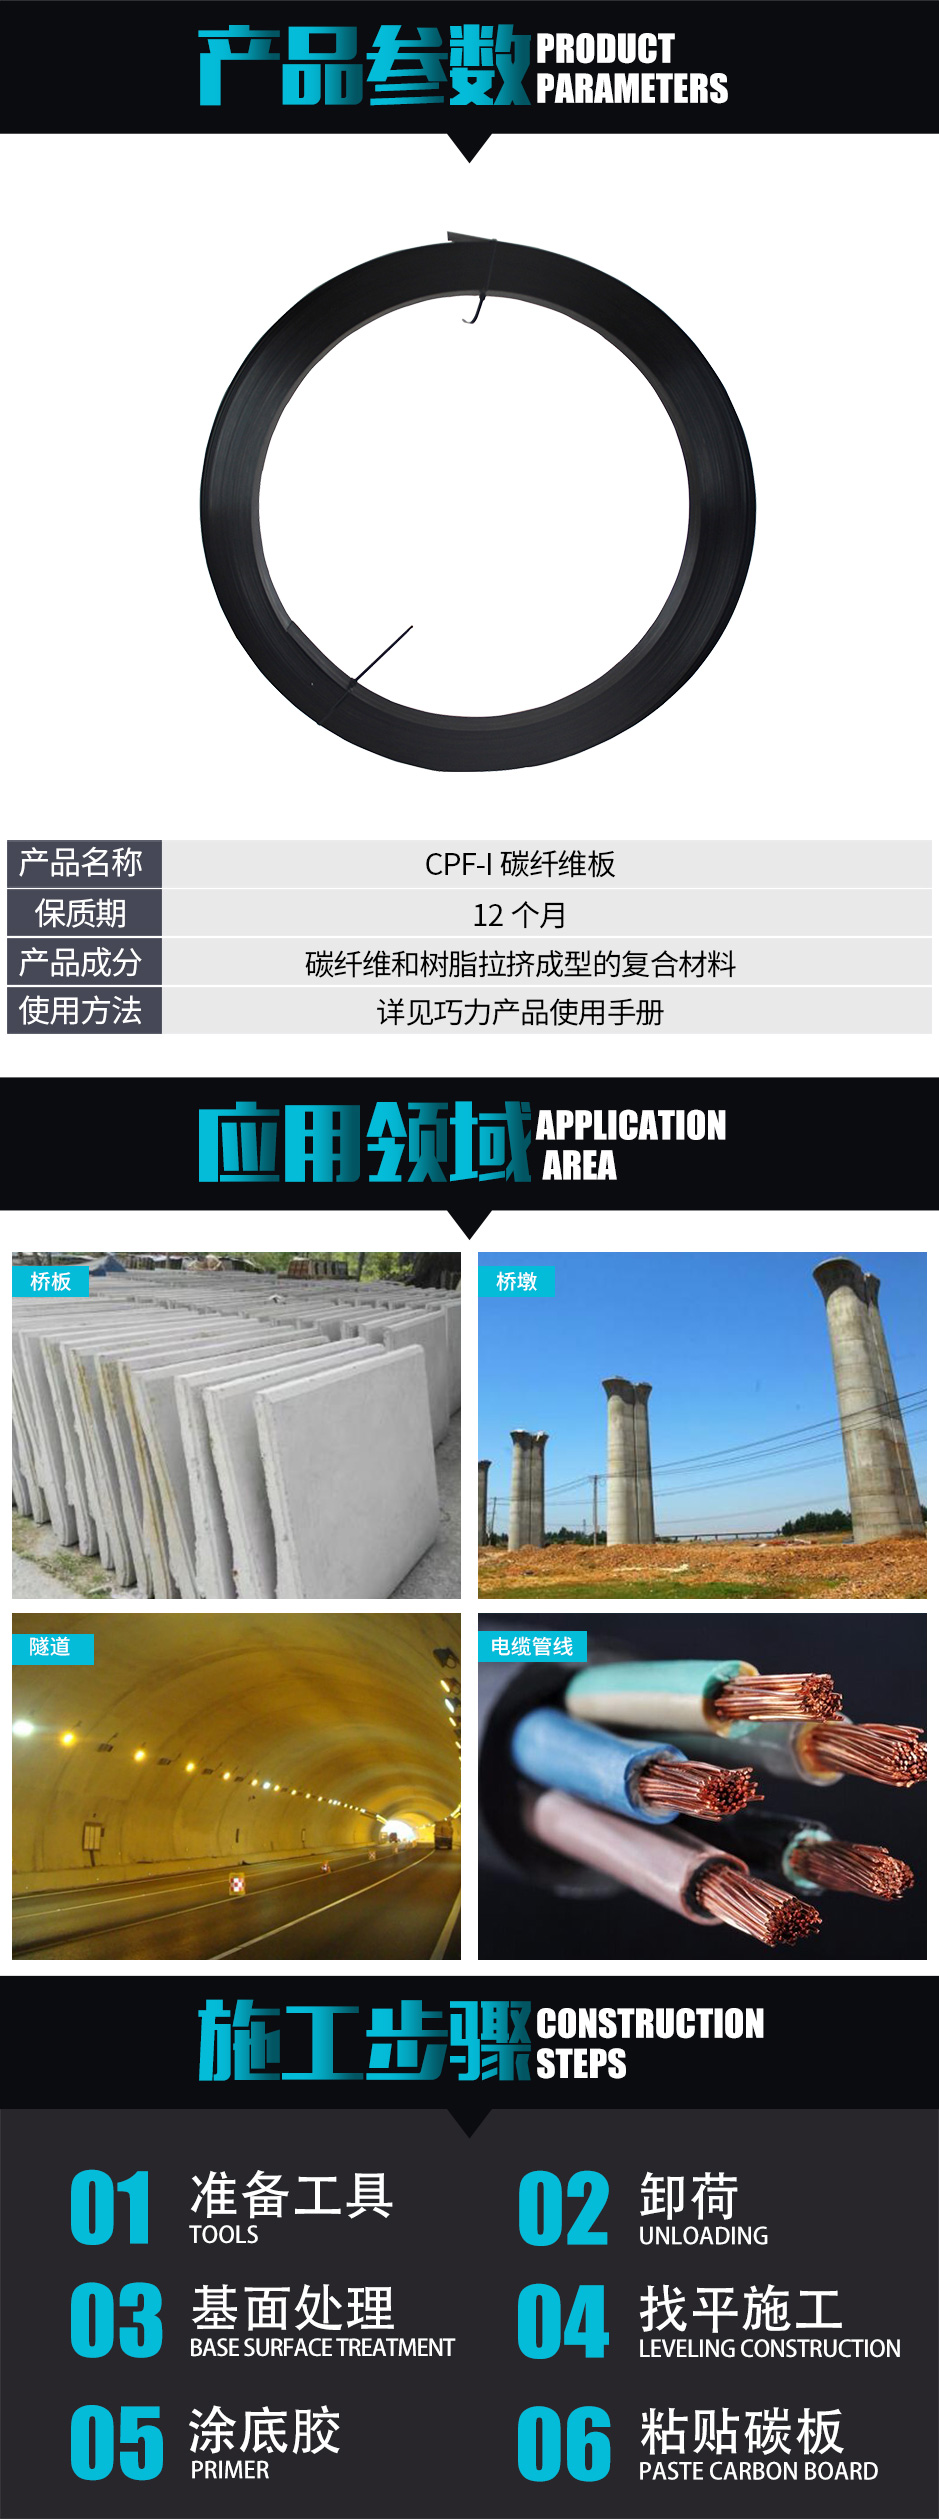 CPF-I碳纤维板_02.jpg